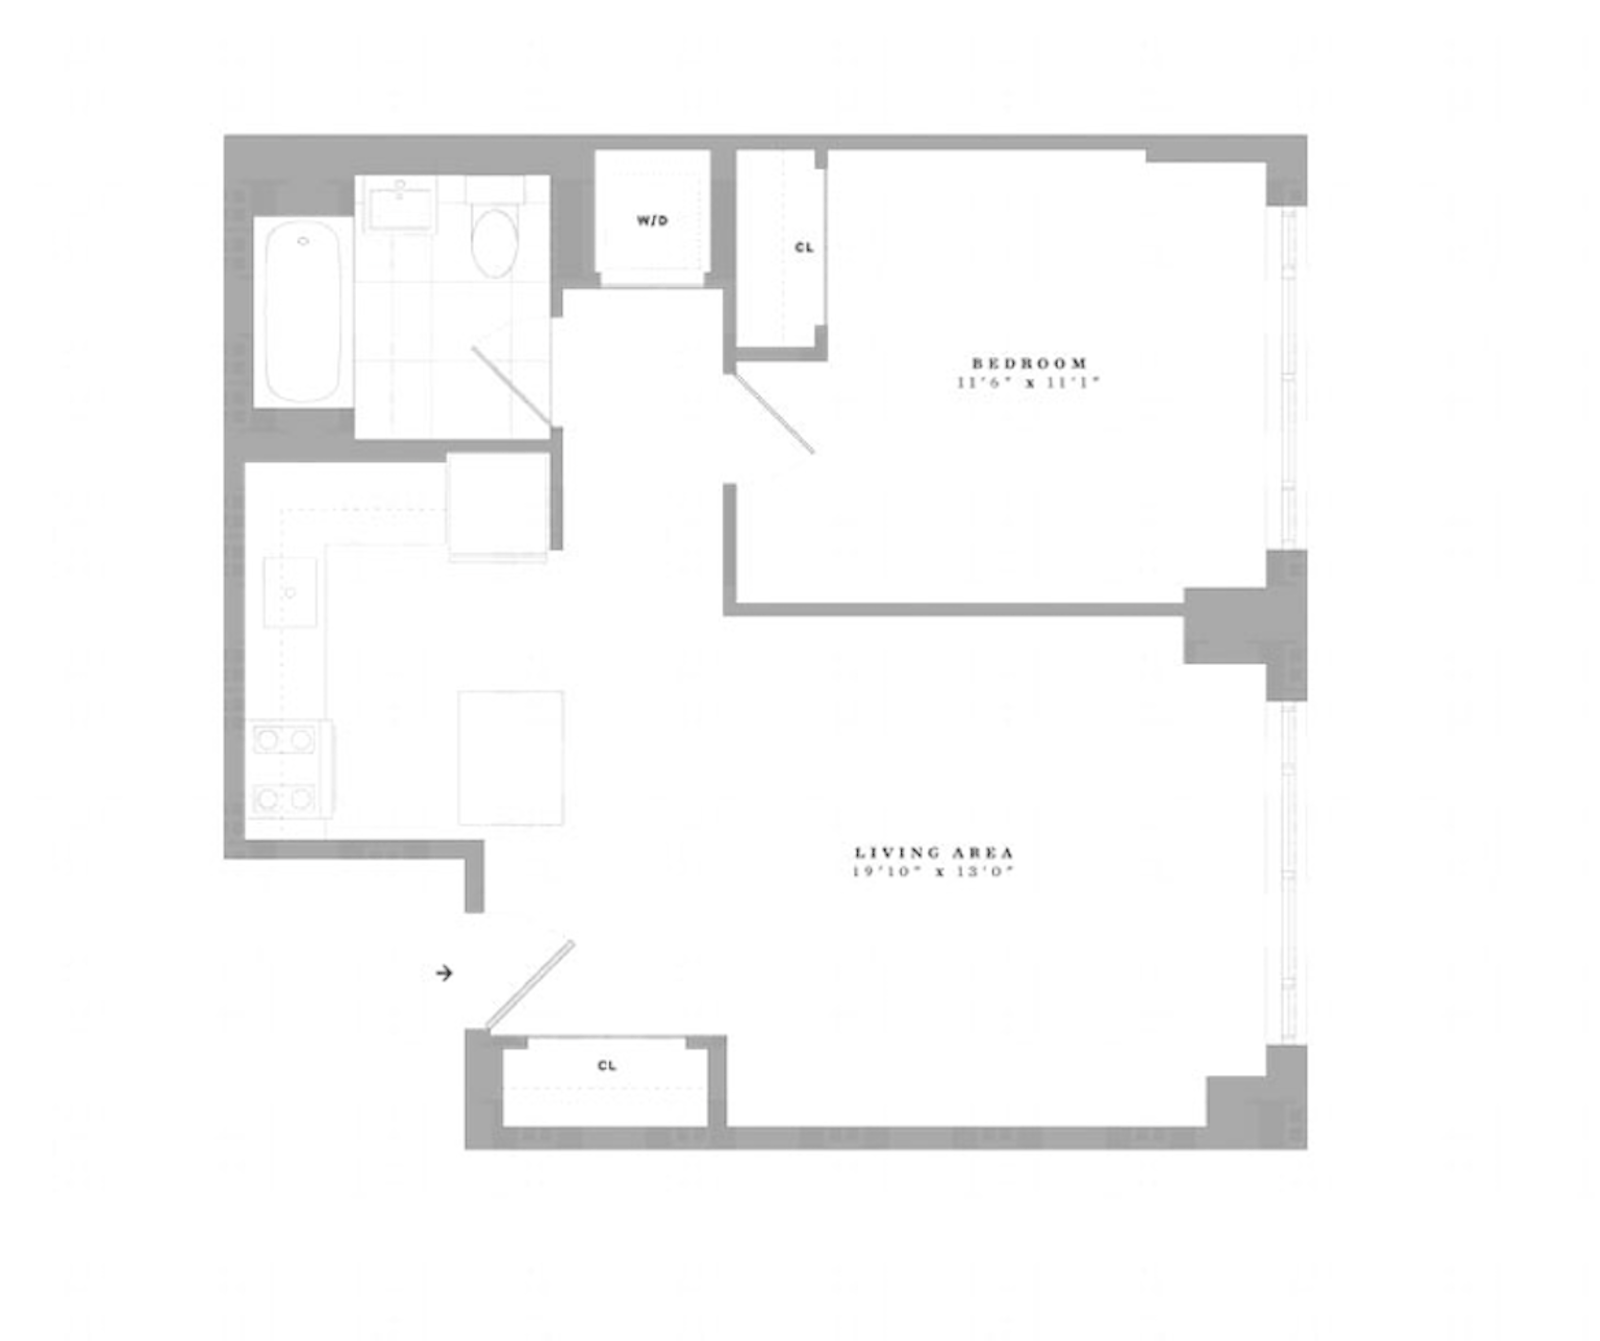 Floorplan for 171 West 131st Street, 617